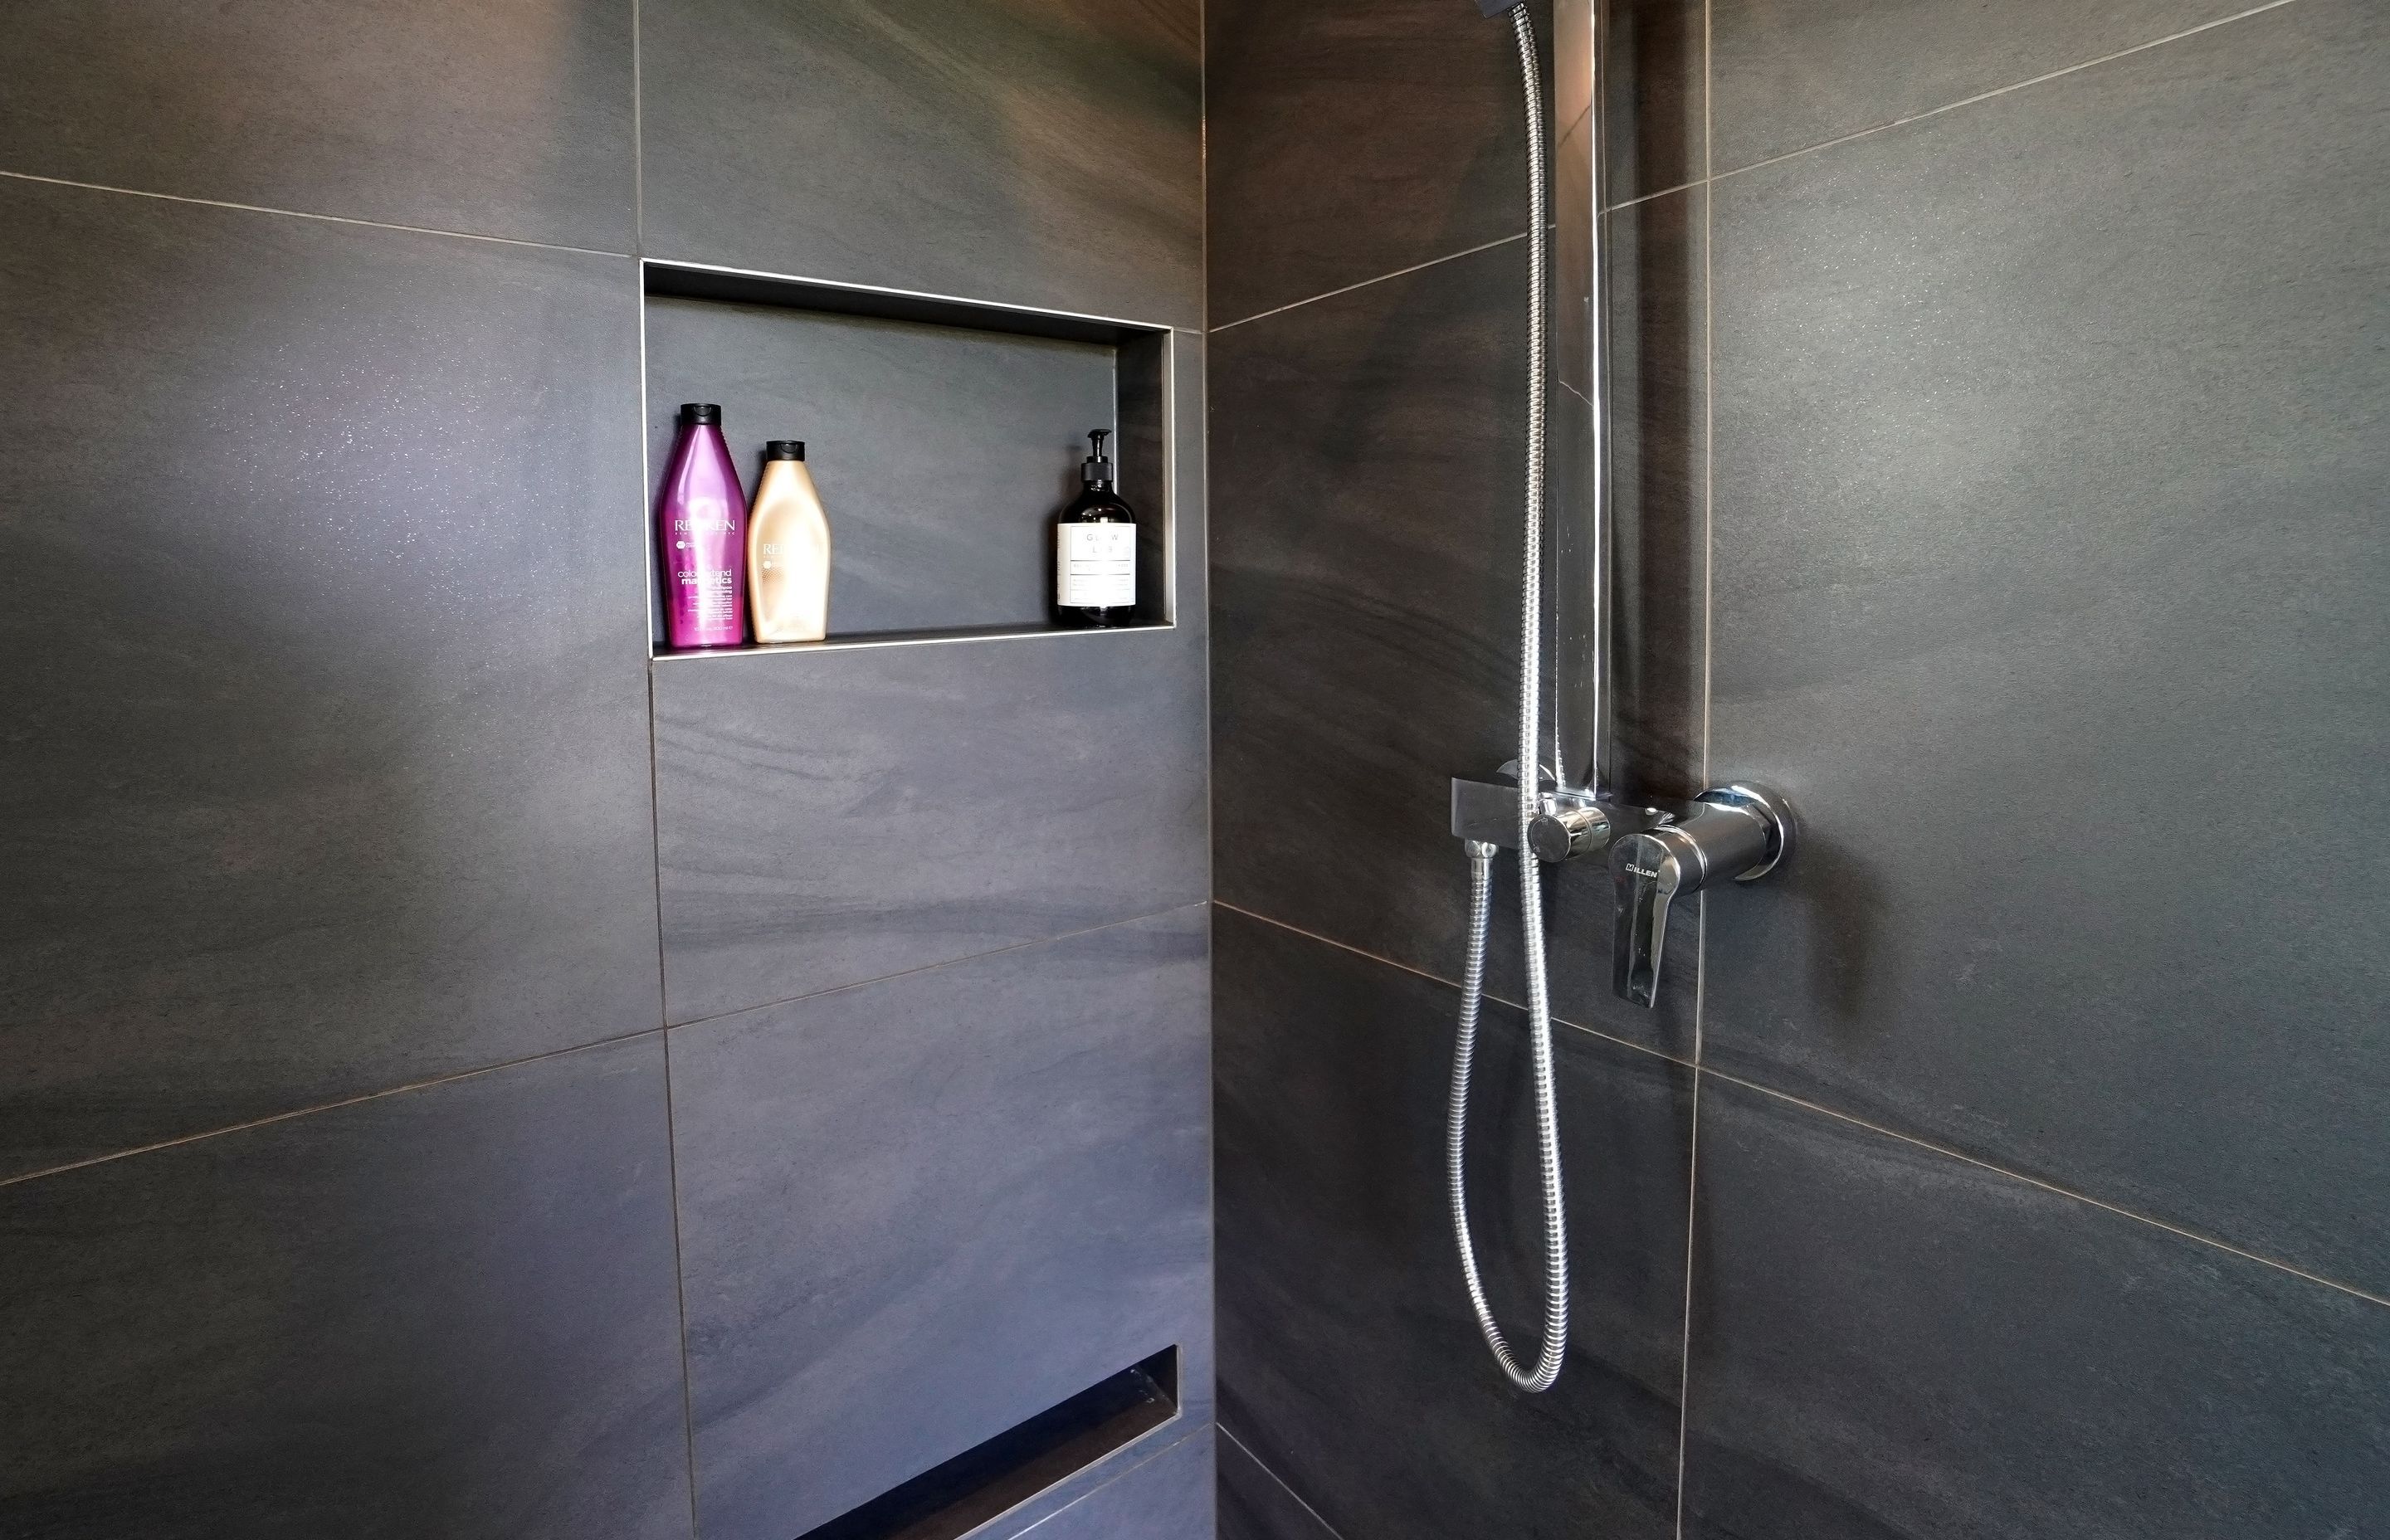 Sarah’s Bathroom Renovation – Adding Luxury &amp; Value to Their Home